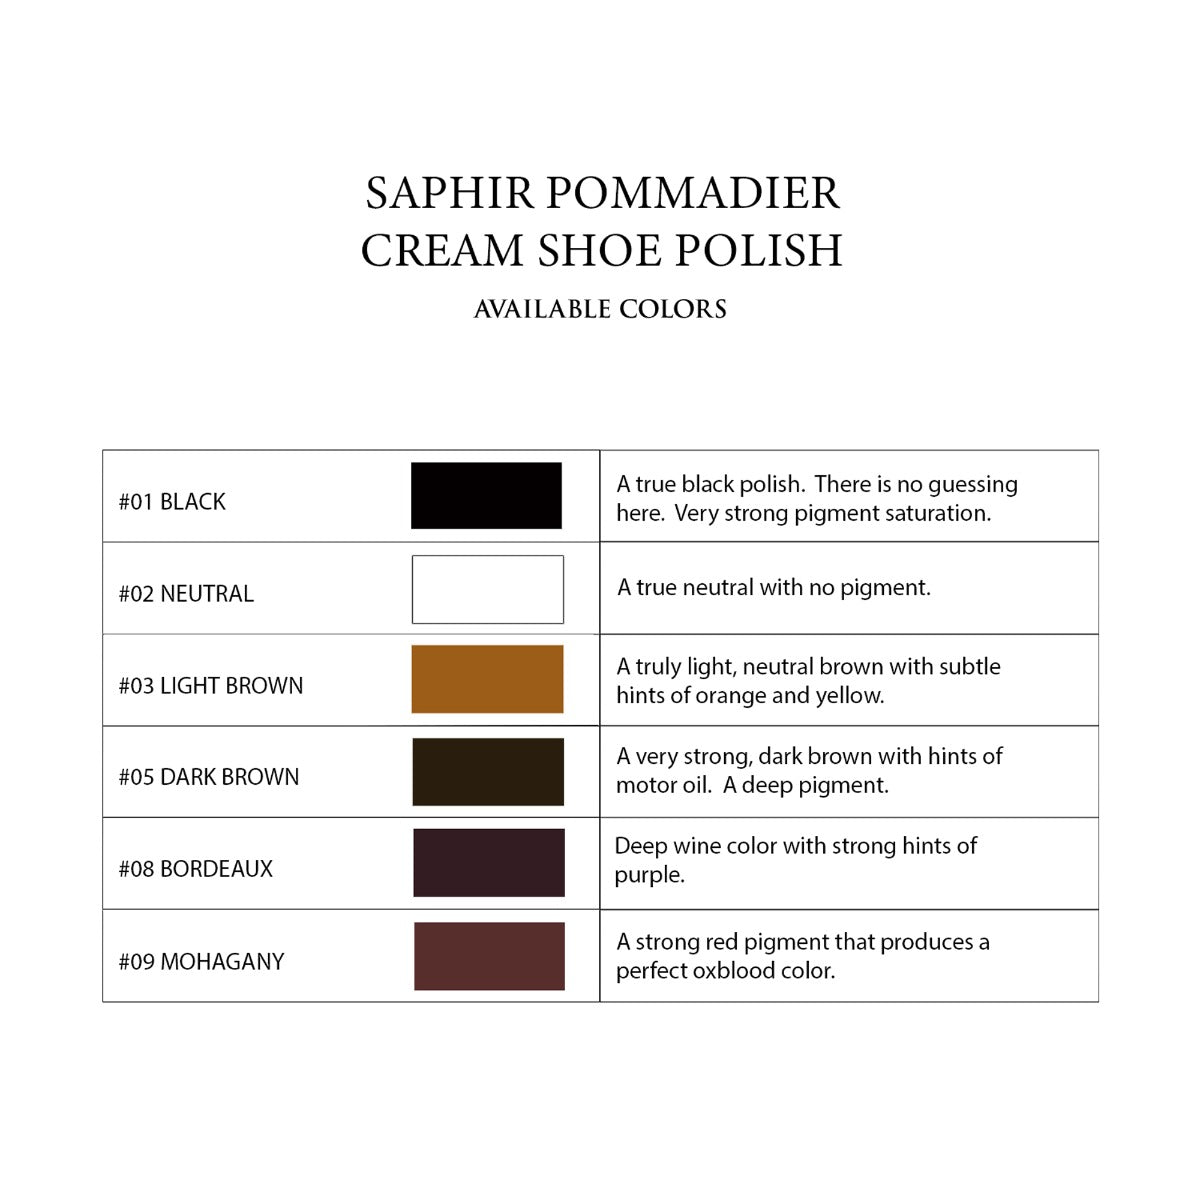 All-natural Saphir Pommadier Cream Shoe Polish by KirbyAllison.com.